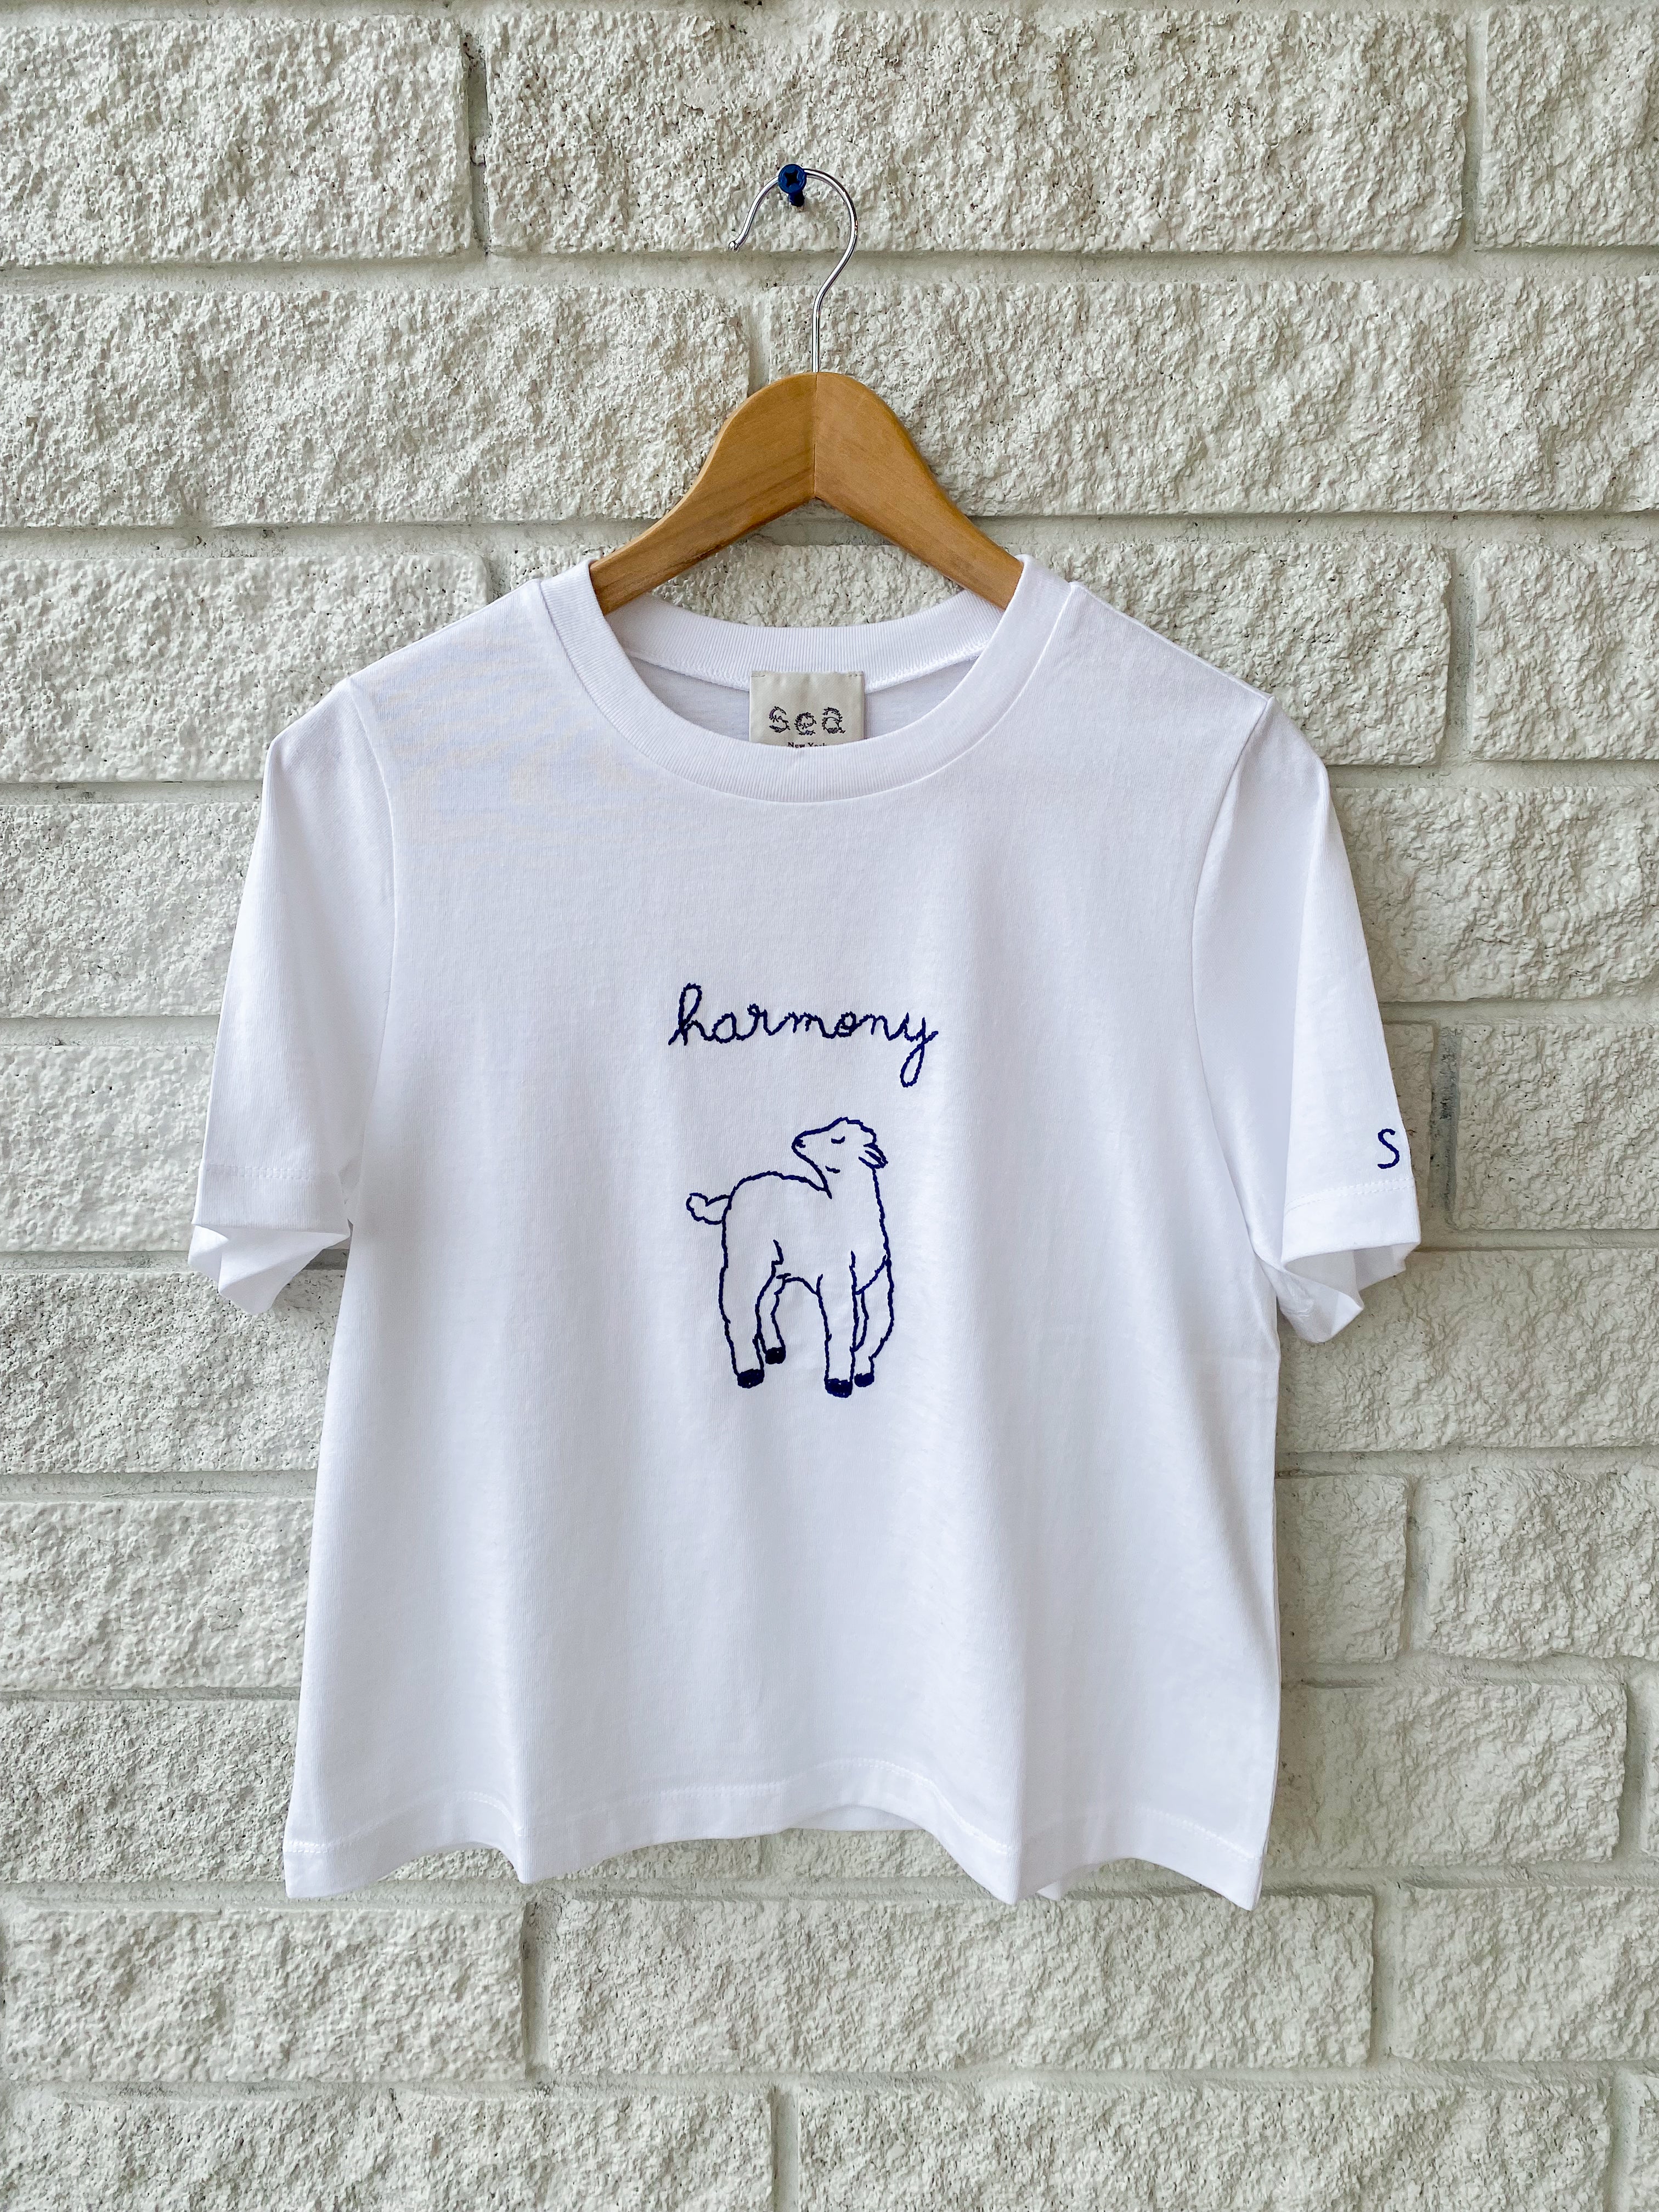 Demi French Workwear Knit T-Shirt